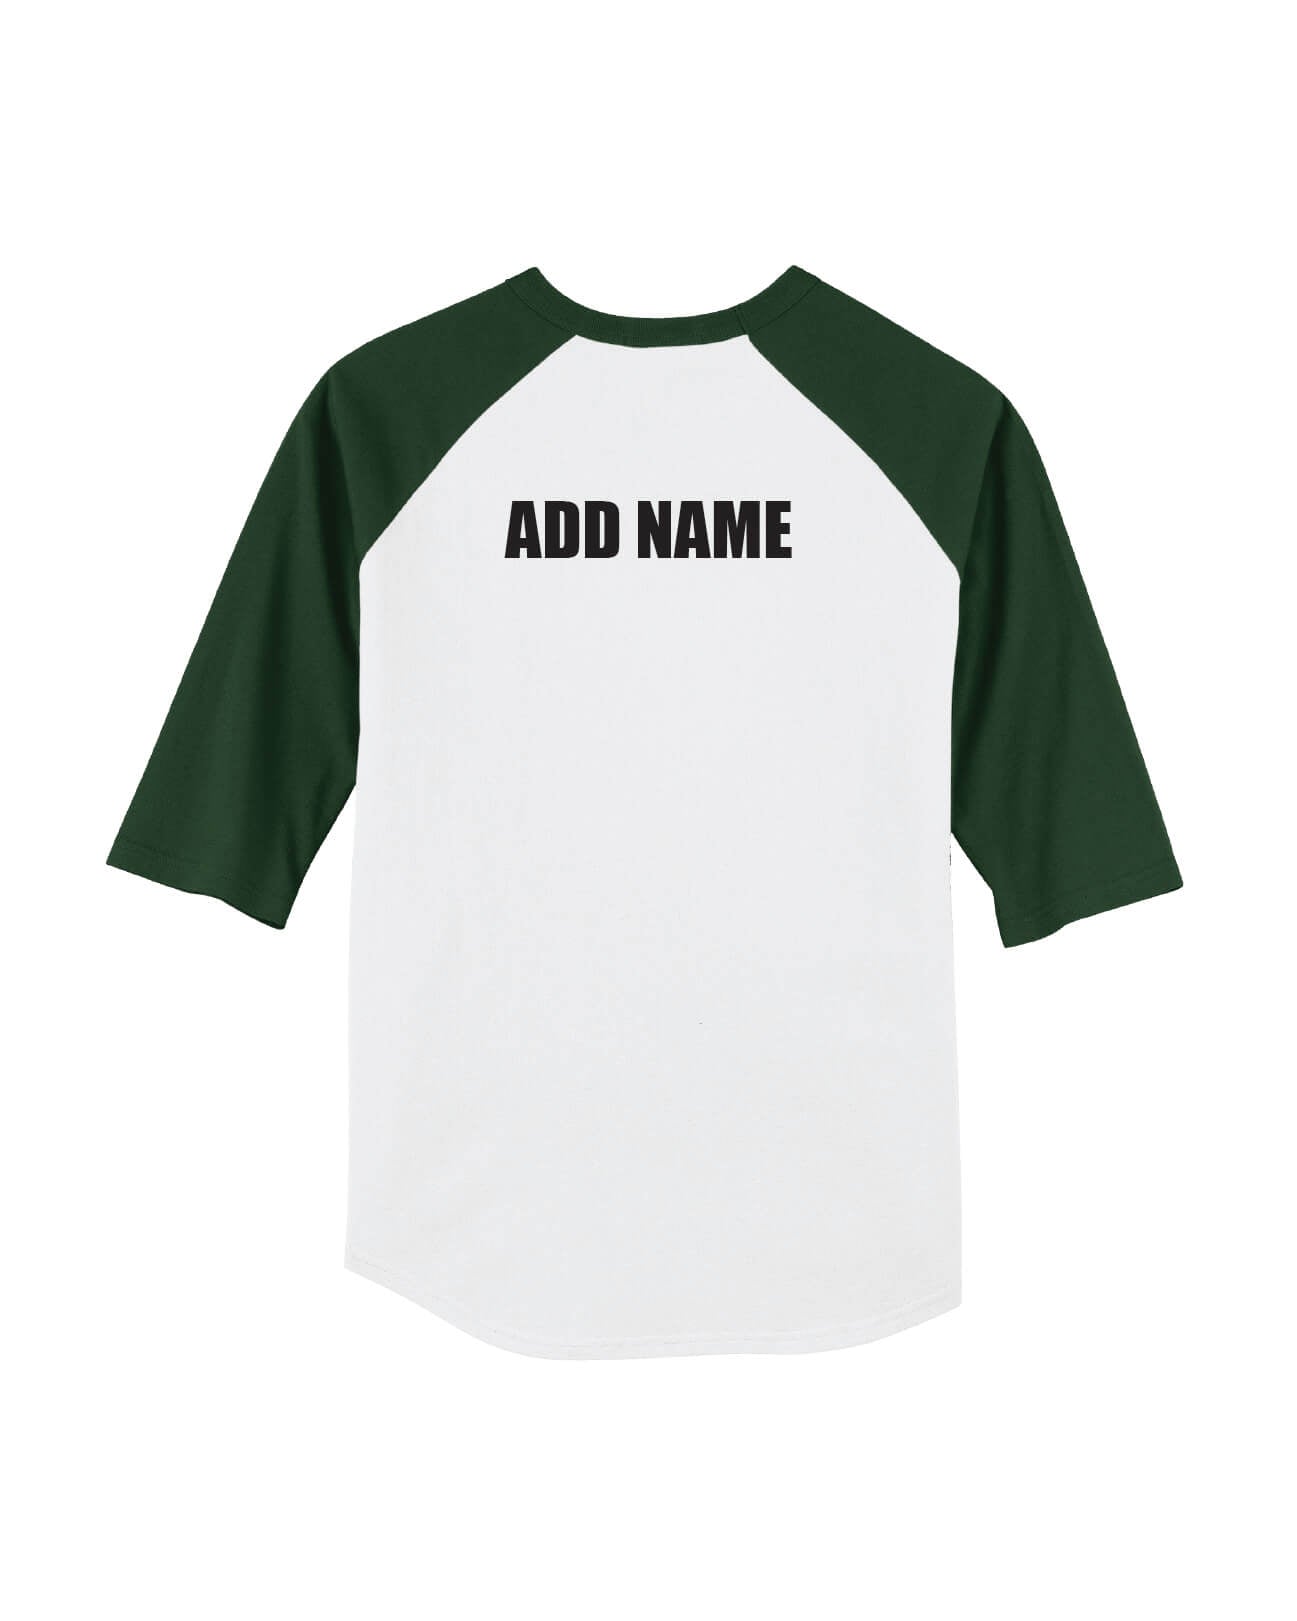 Notre Dame Sport Tek Colorblock Raglan Jersey (Youth) green/white back